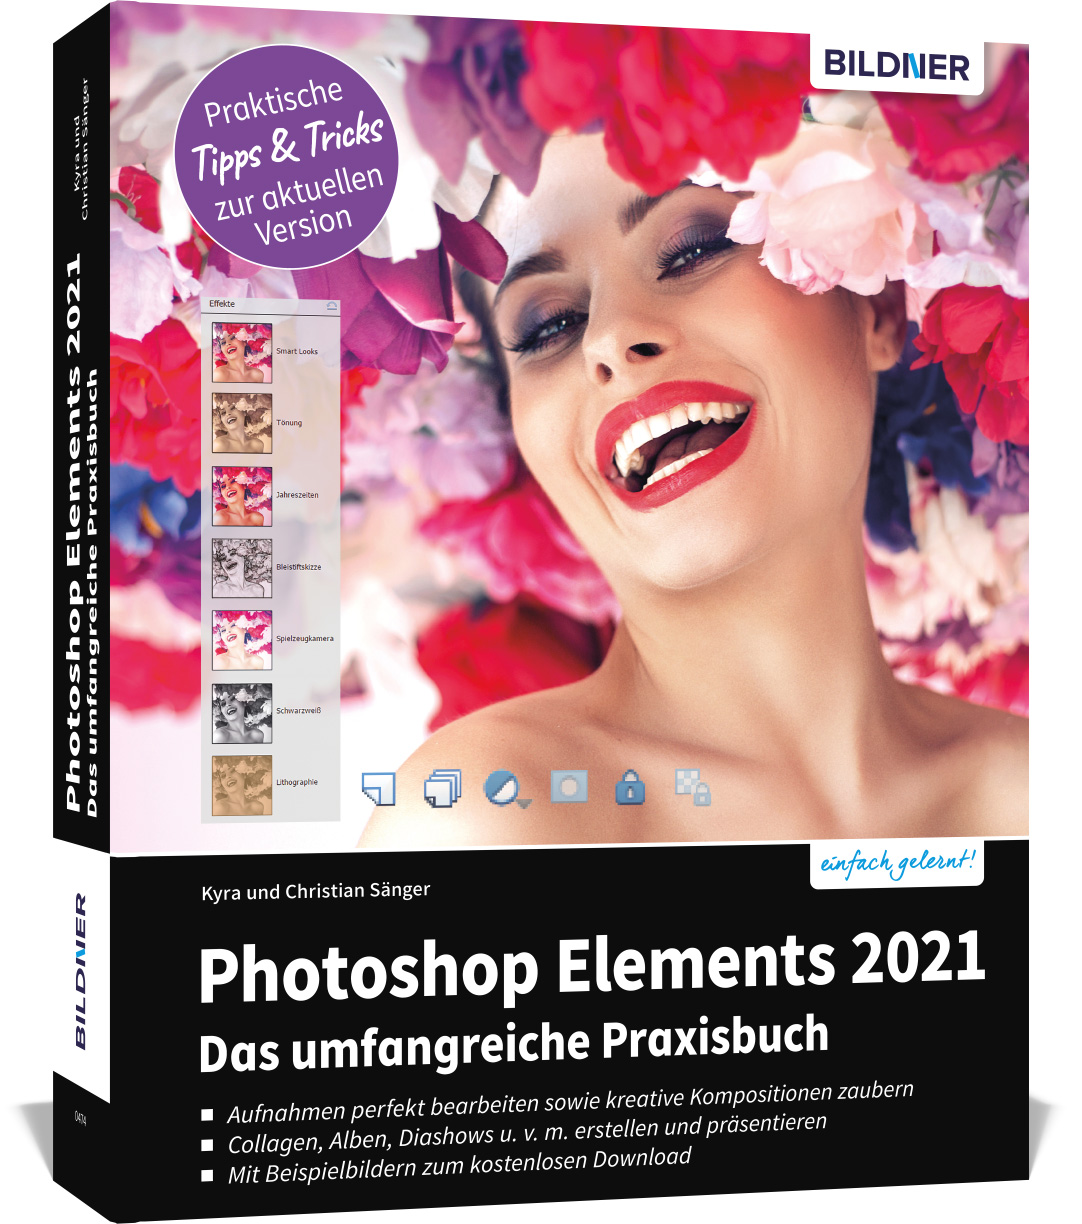 adobe photoshop elements 2021 student discount